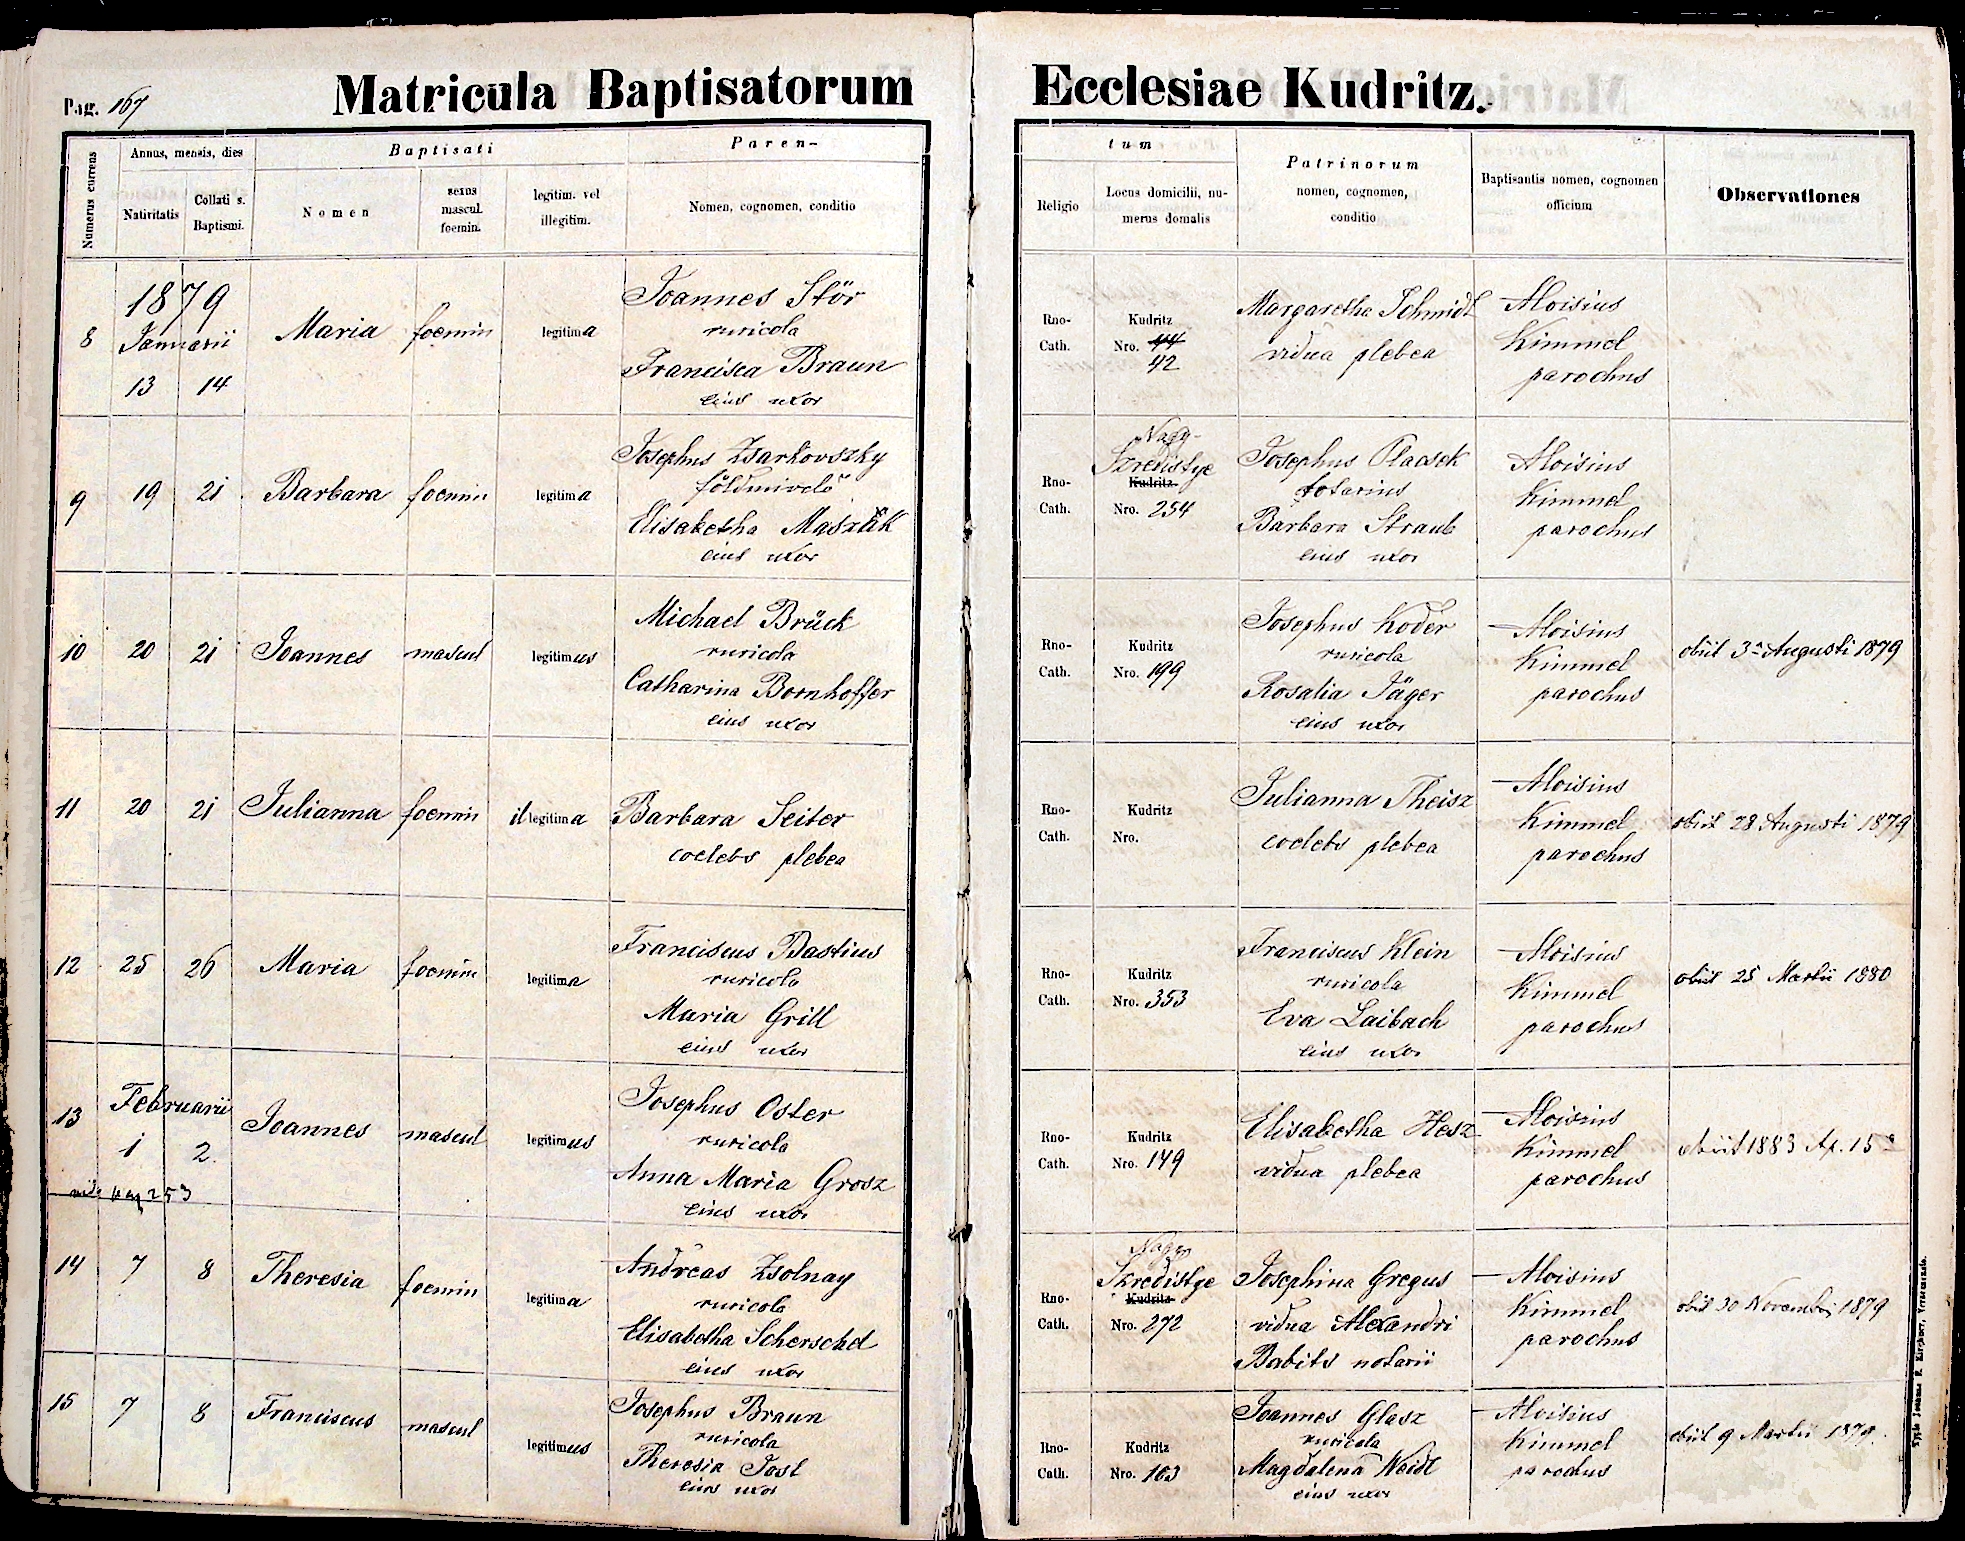 images/church_records/BIRTHS/1870-1879B/1879/167